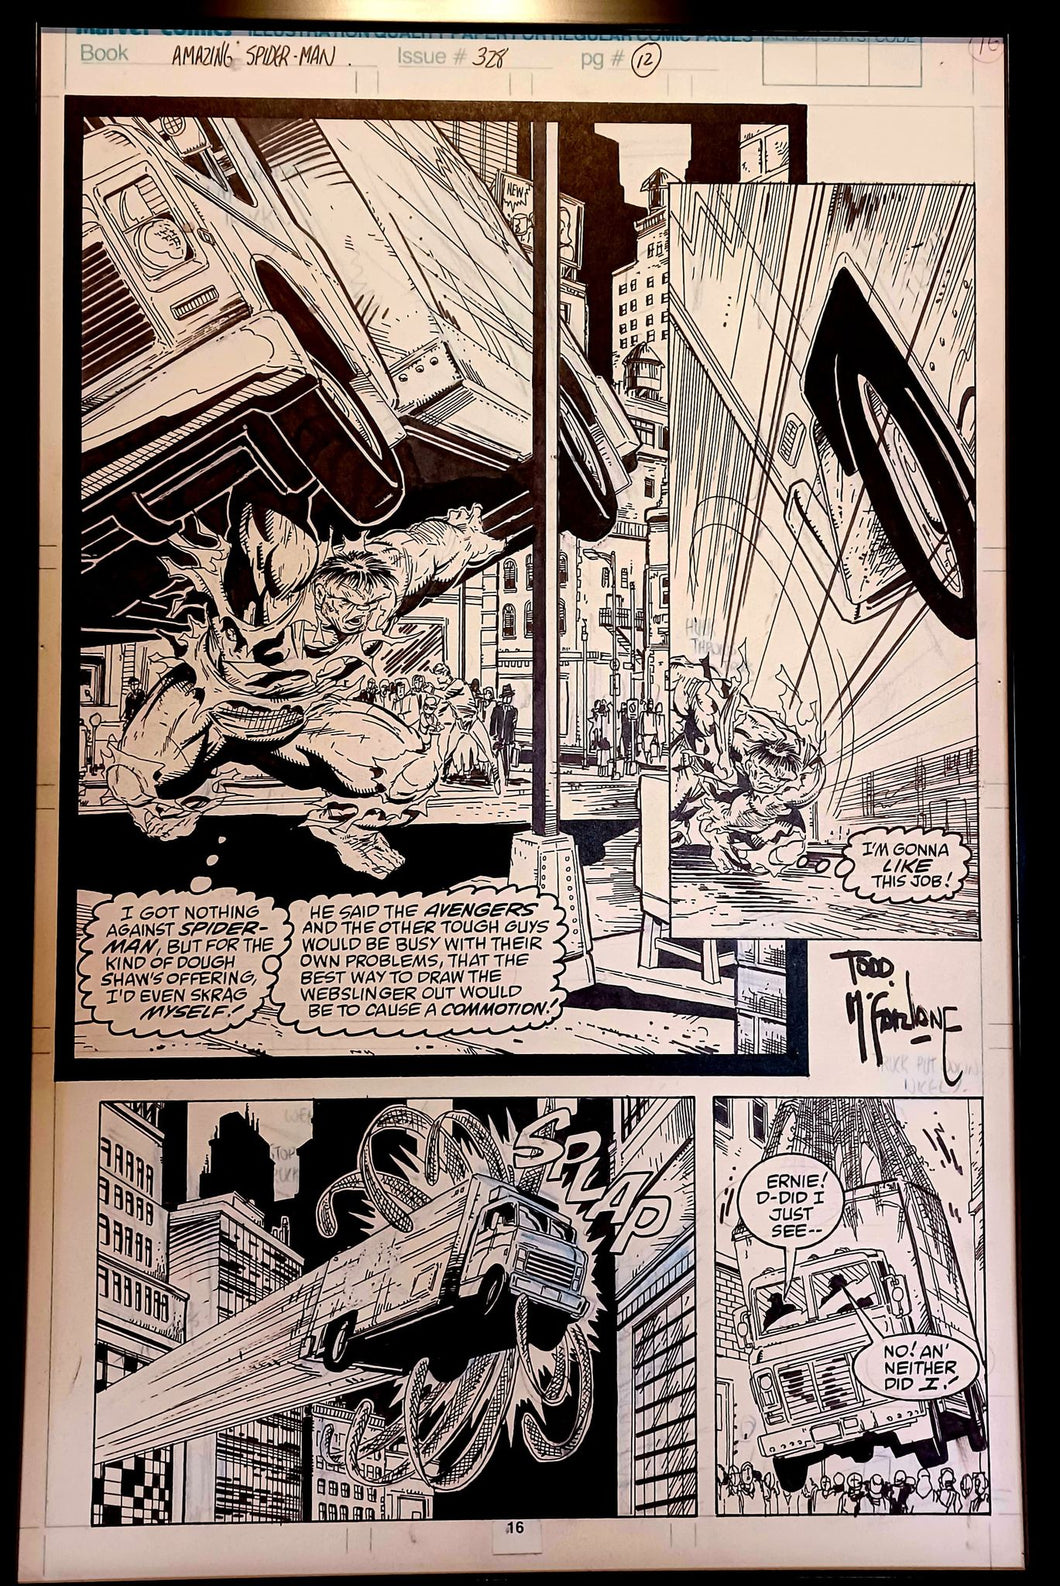 Amazing Spider-Man #328 pg. 12 by Todd McFarlane 11x17 FRAMED Original Art Print Comic Poster